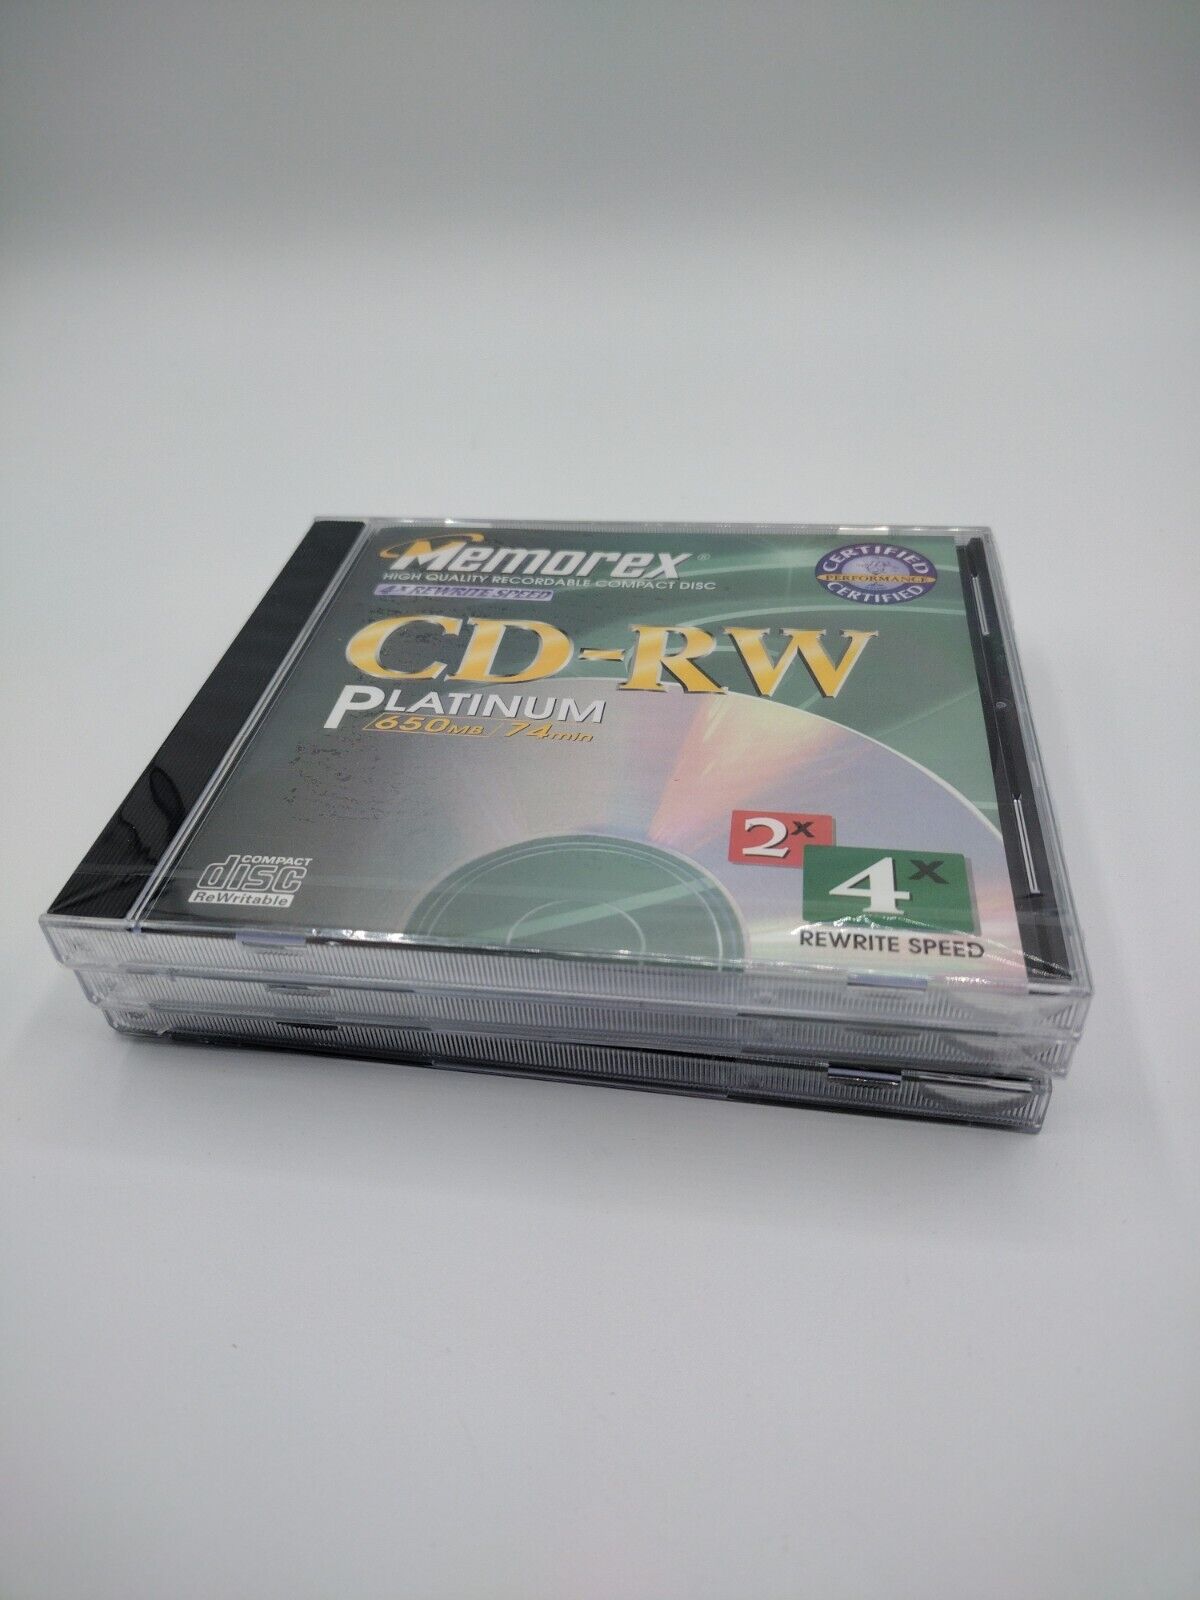 Memorex CD-RW Platinum 4x Rewrite Speed 650 MB 74 Min SEALED Lot Of 3